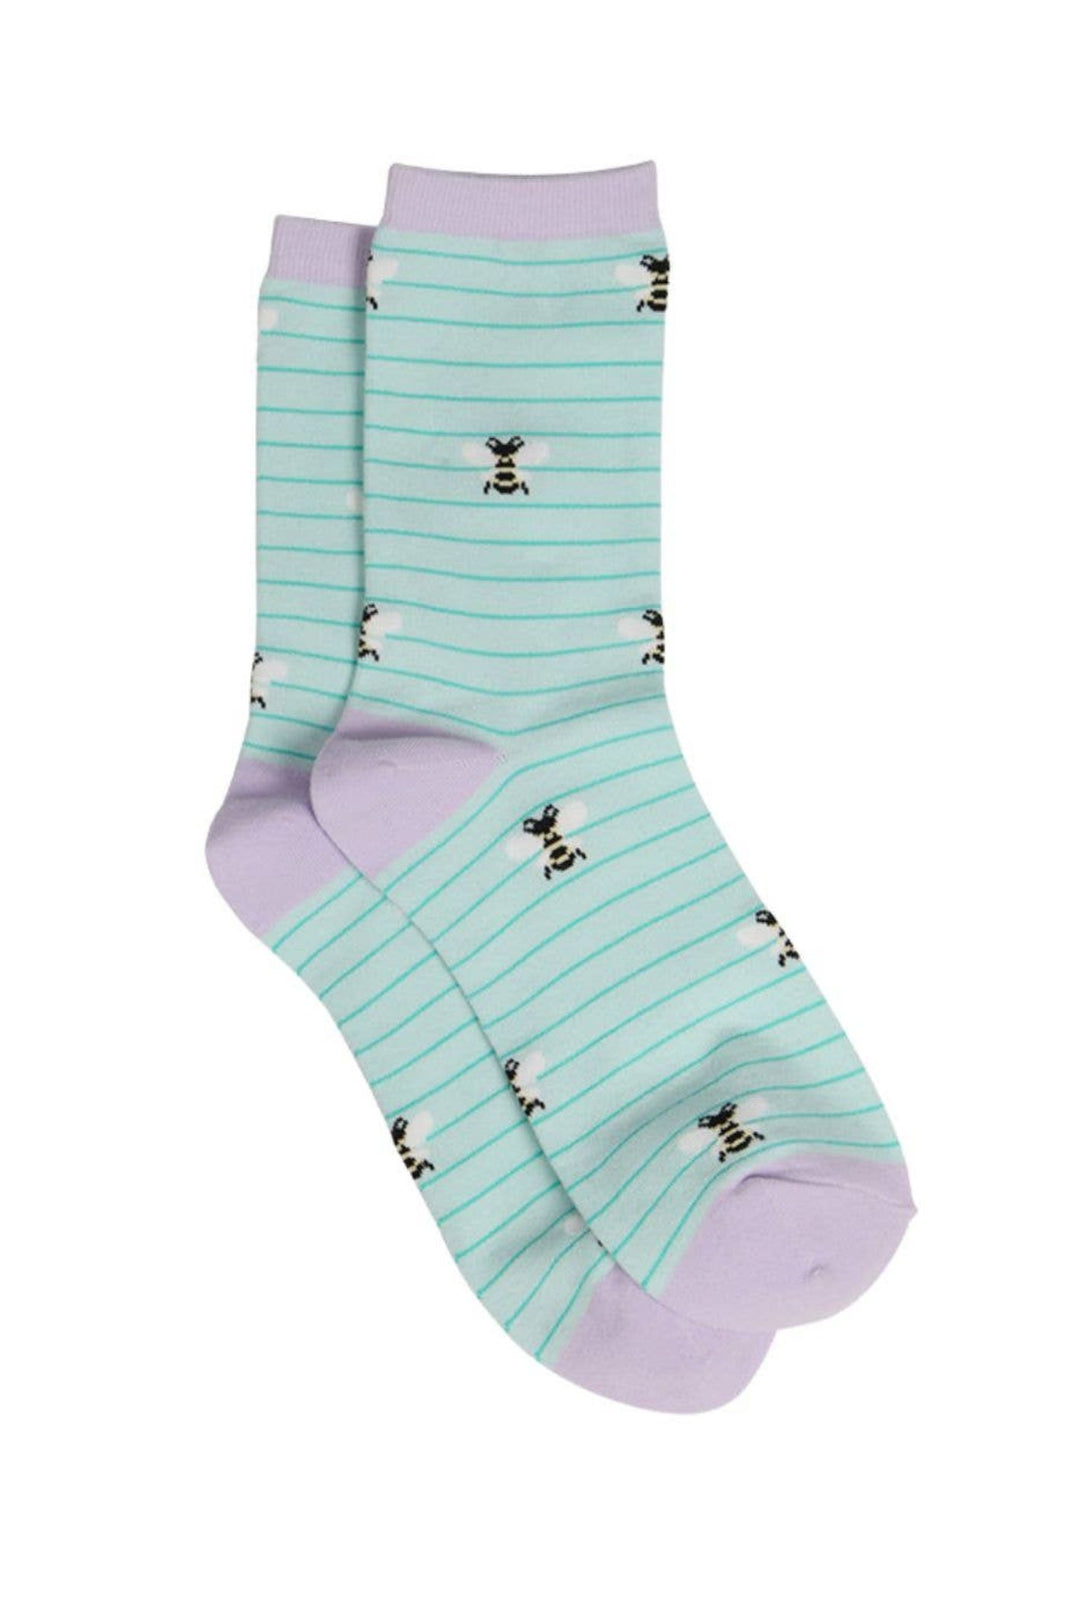 Blue Bumblebee Striped Ankle Socks